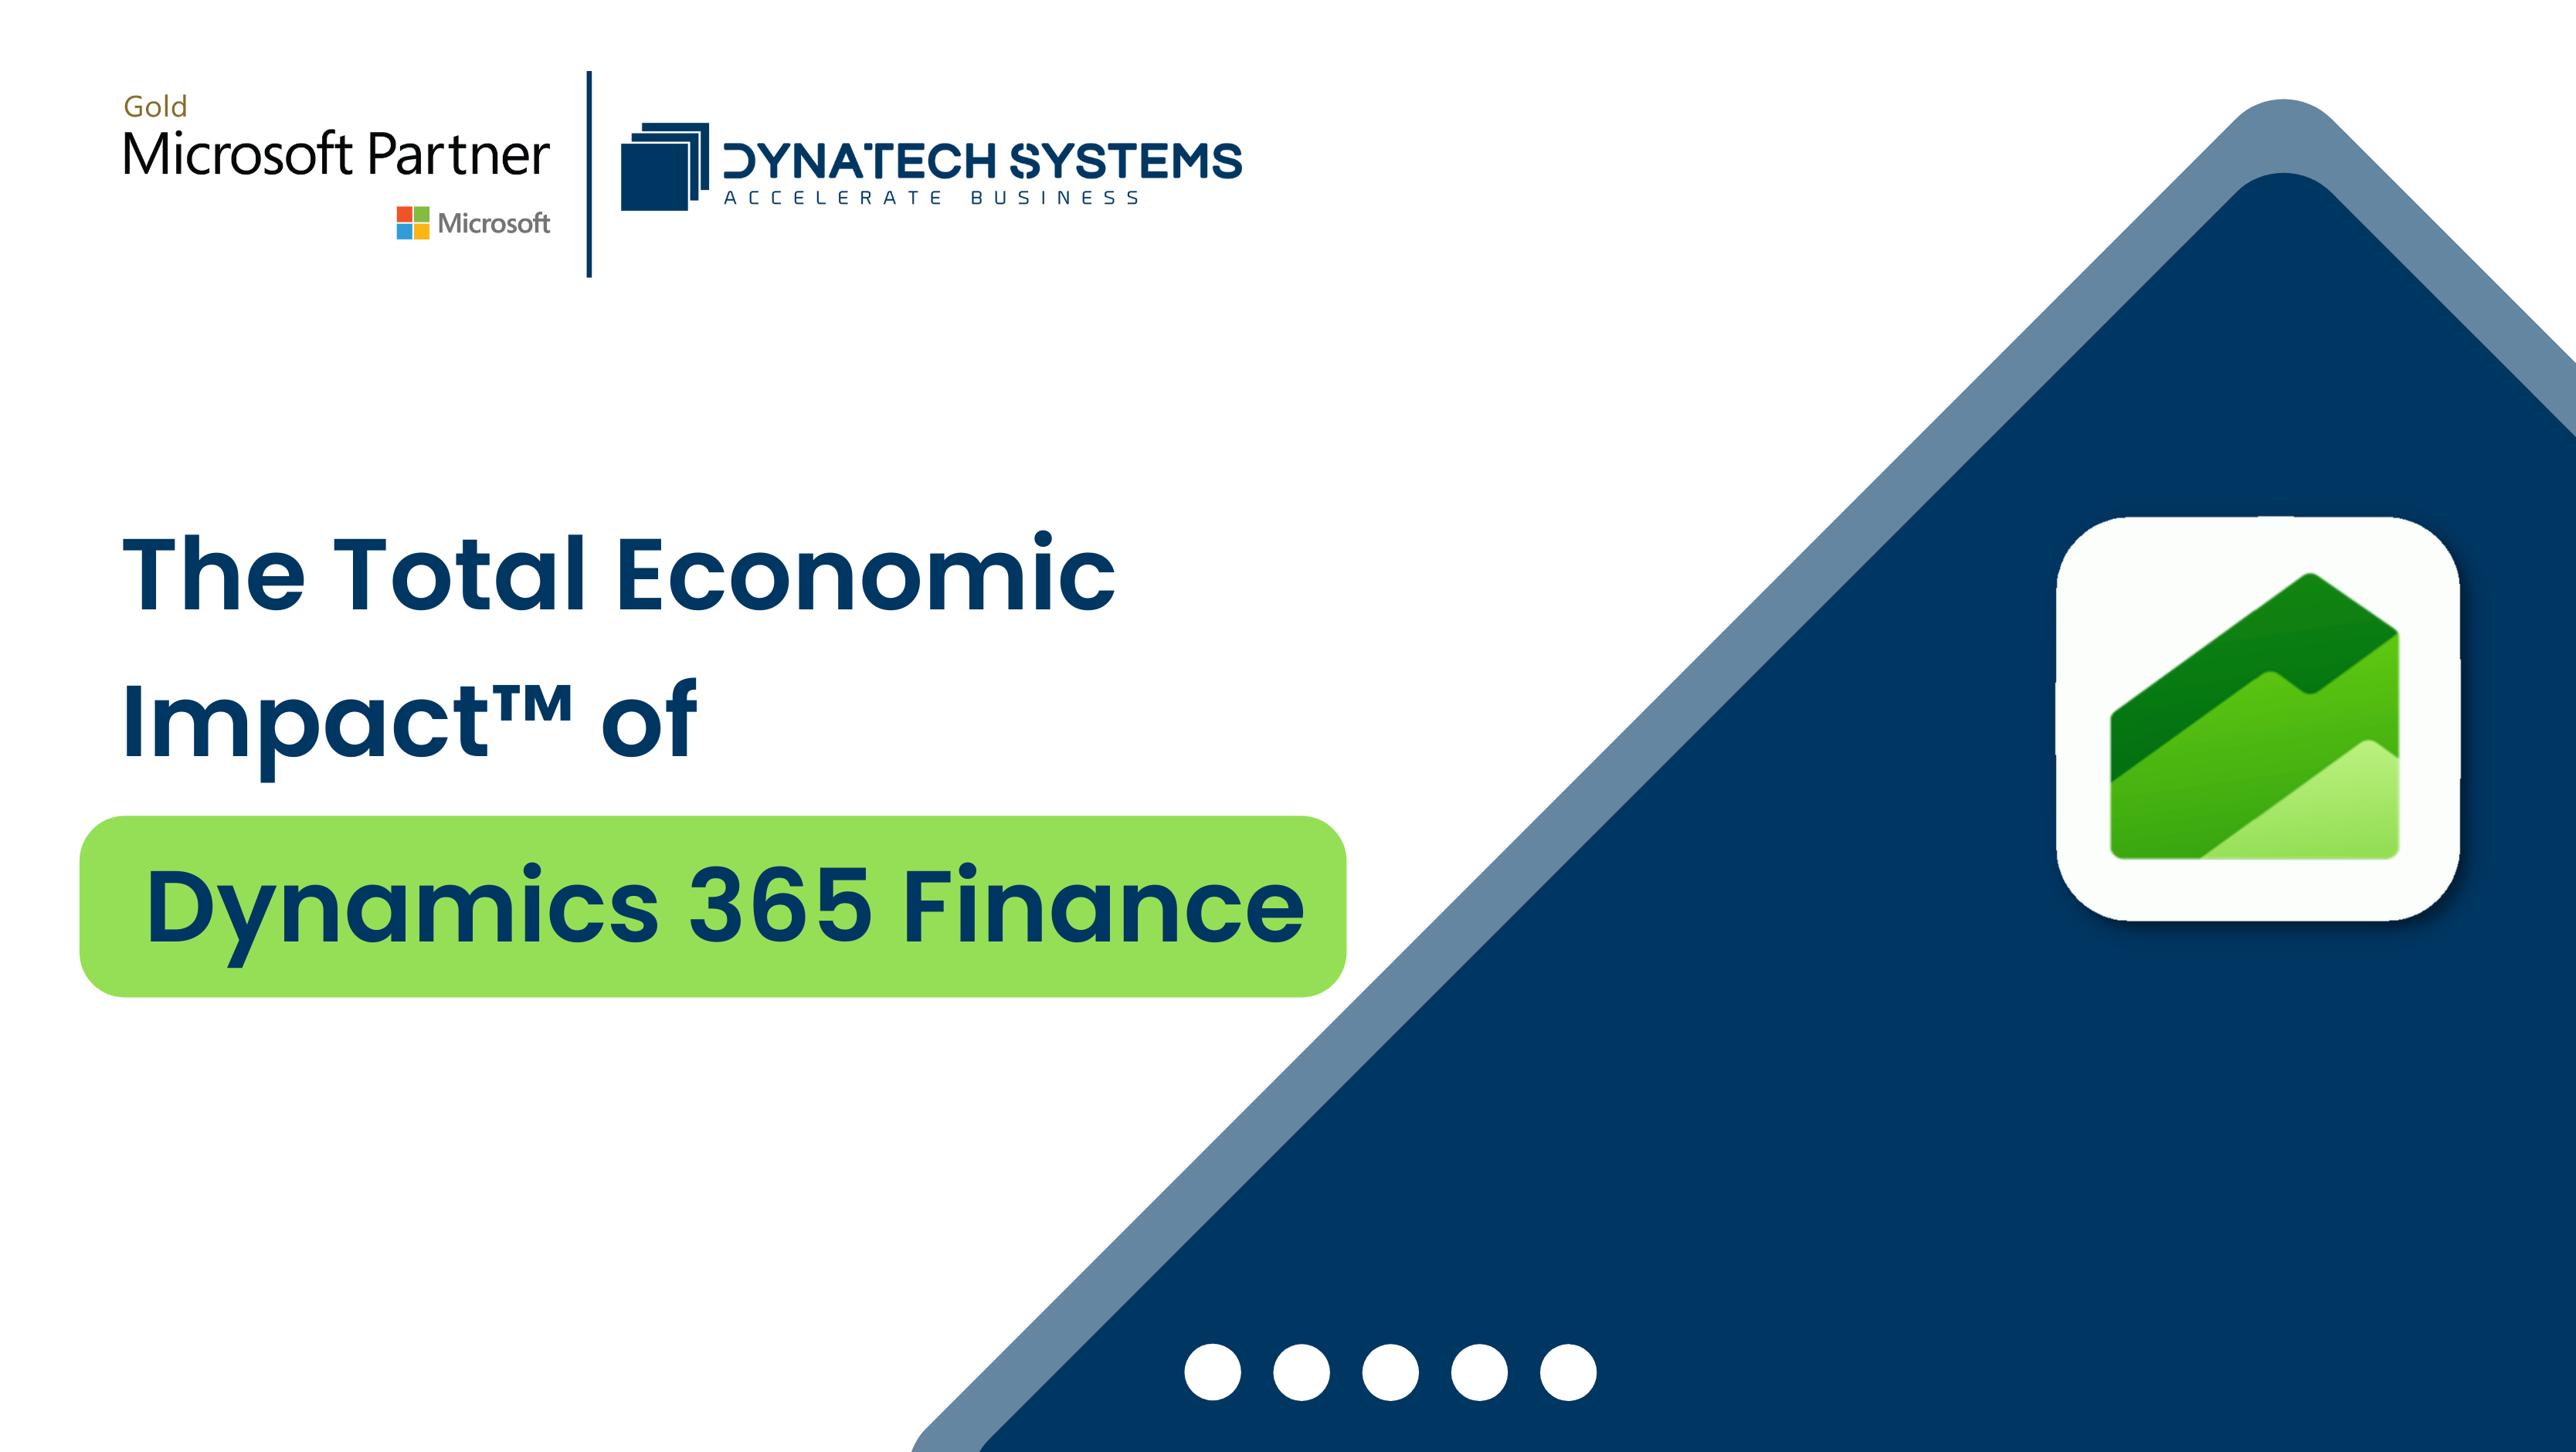 The Total Economic Impact of Dynamics 365 Finance